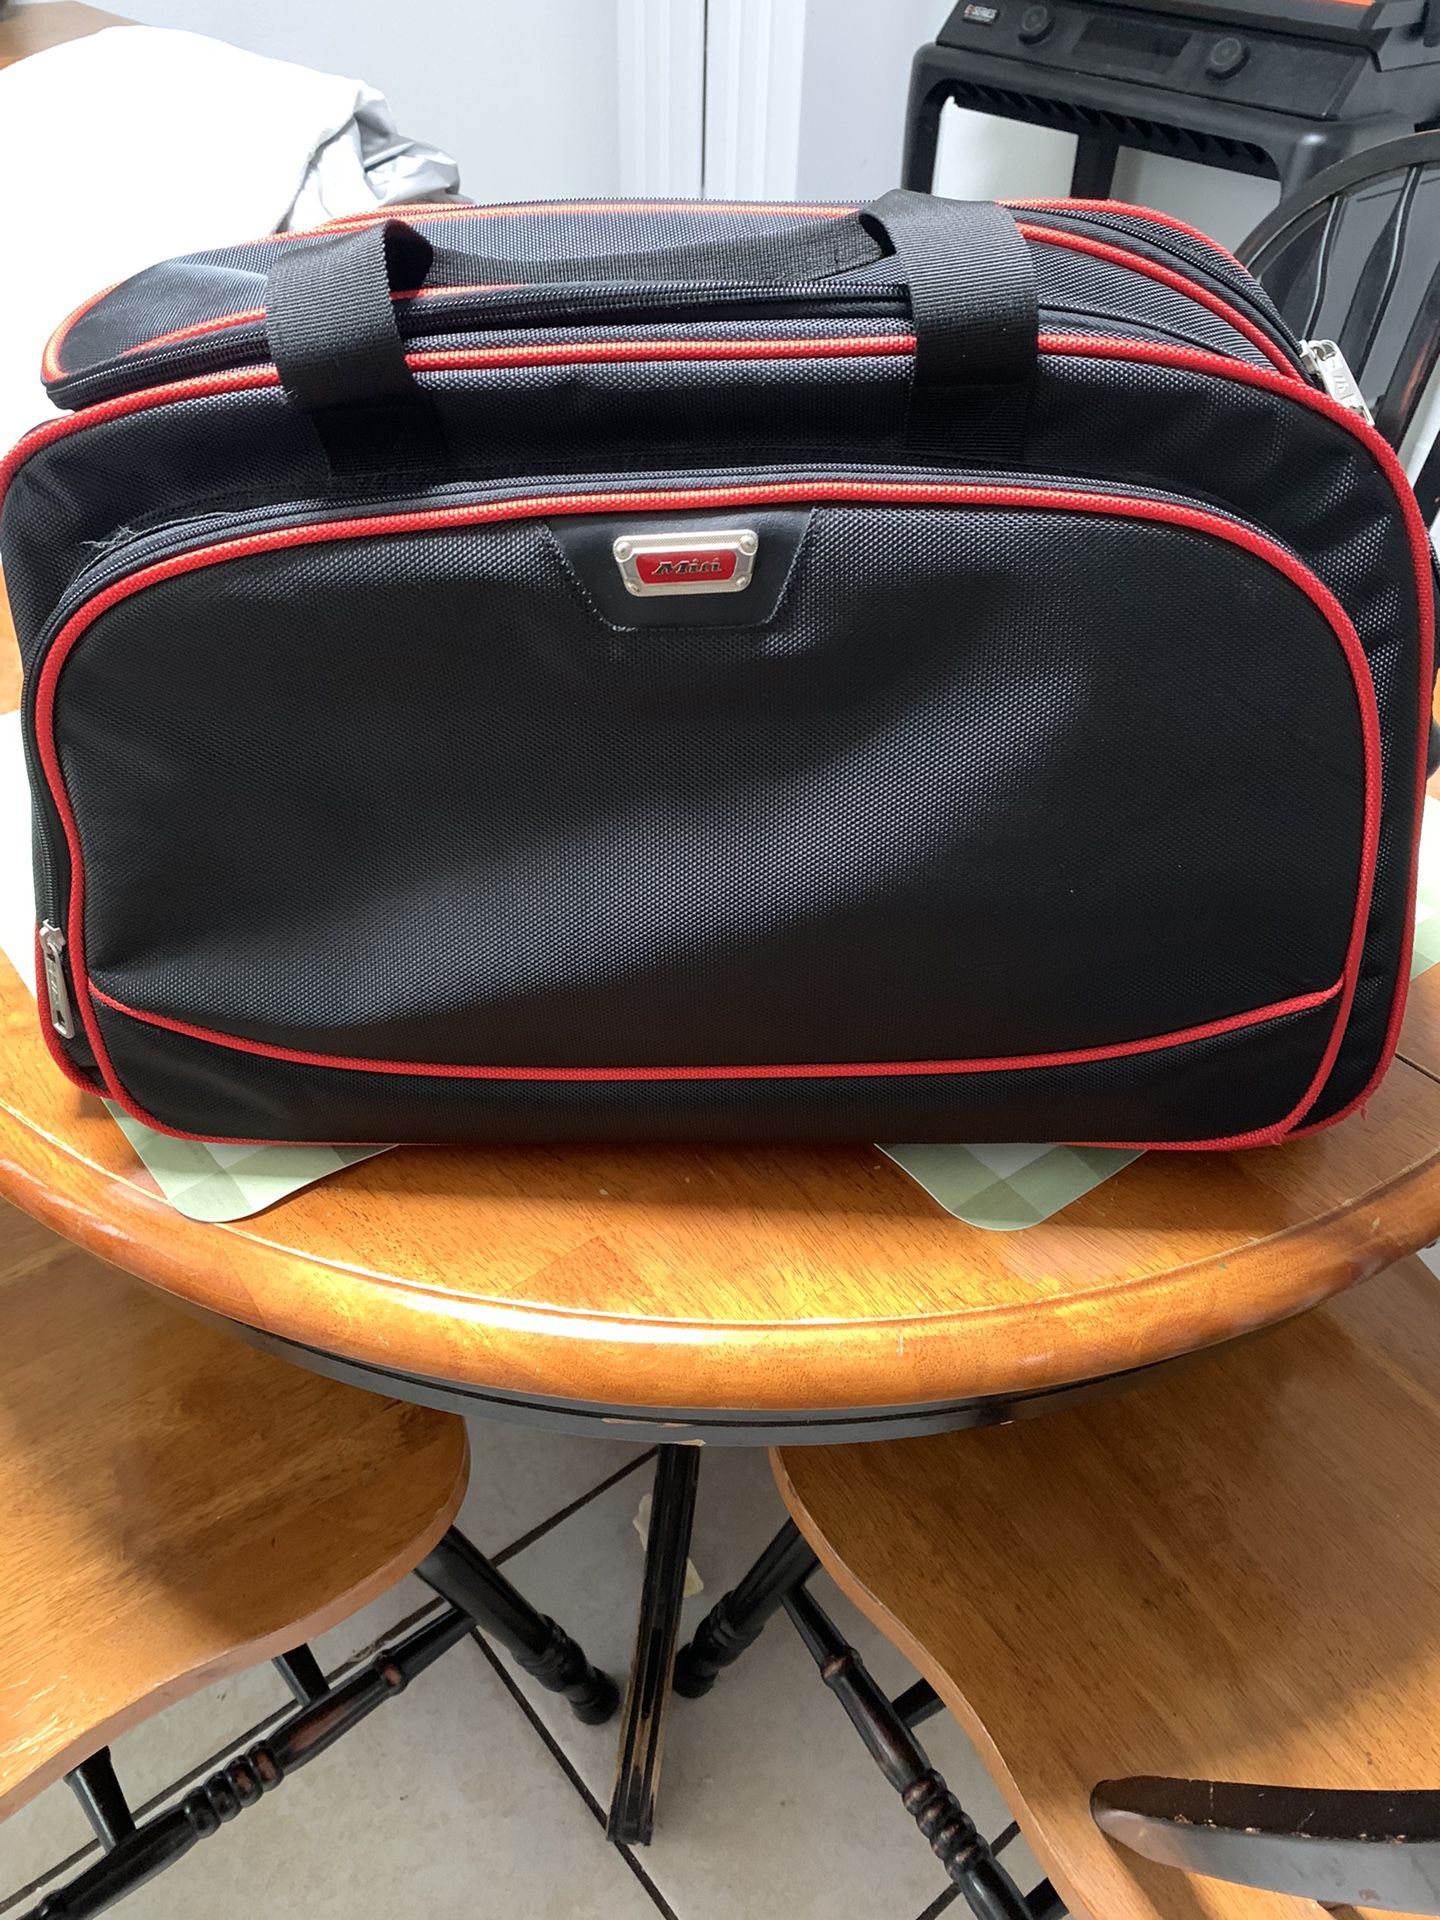 Suitcase Travel Bag